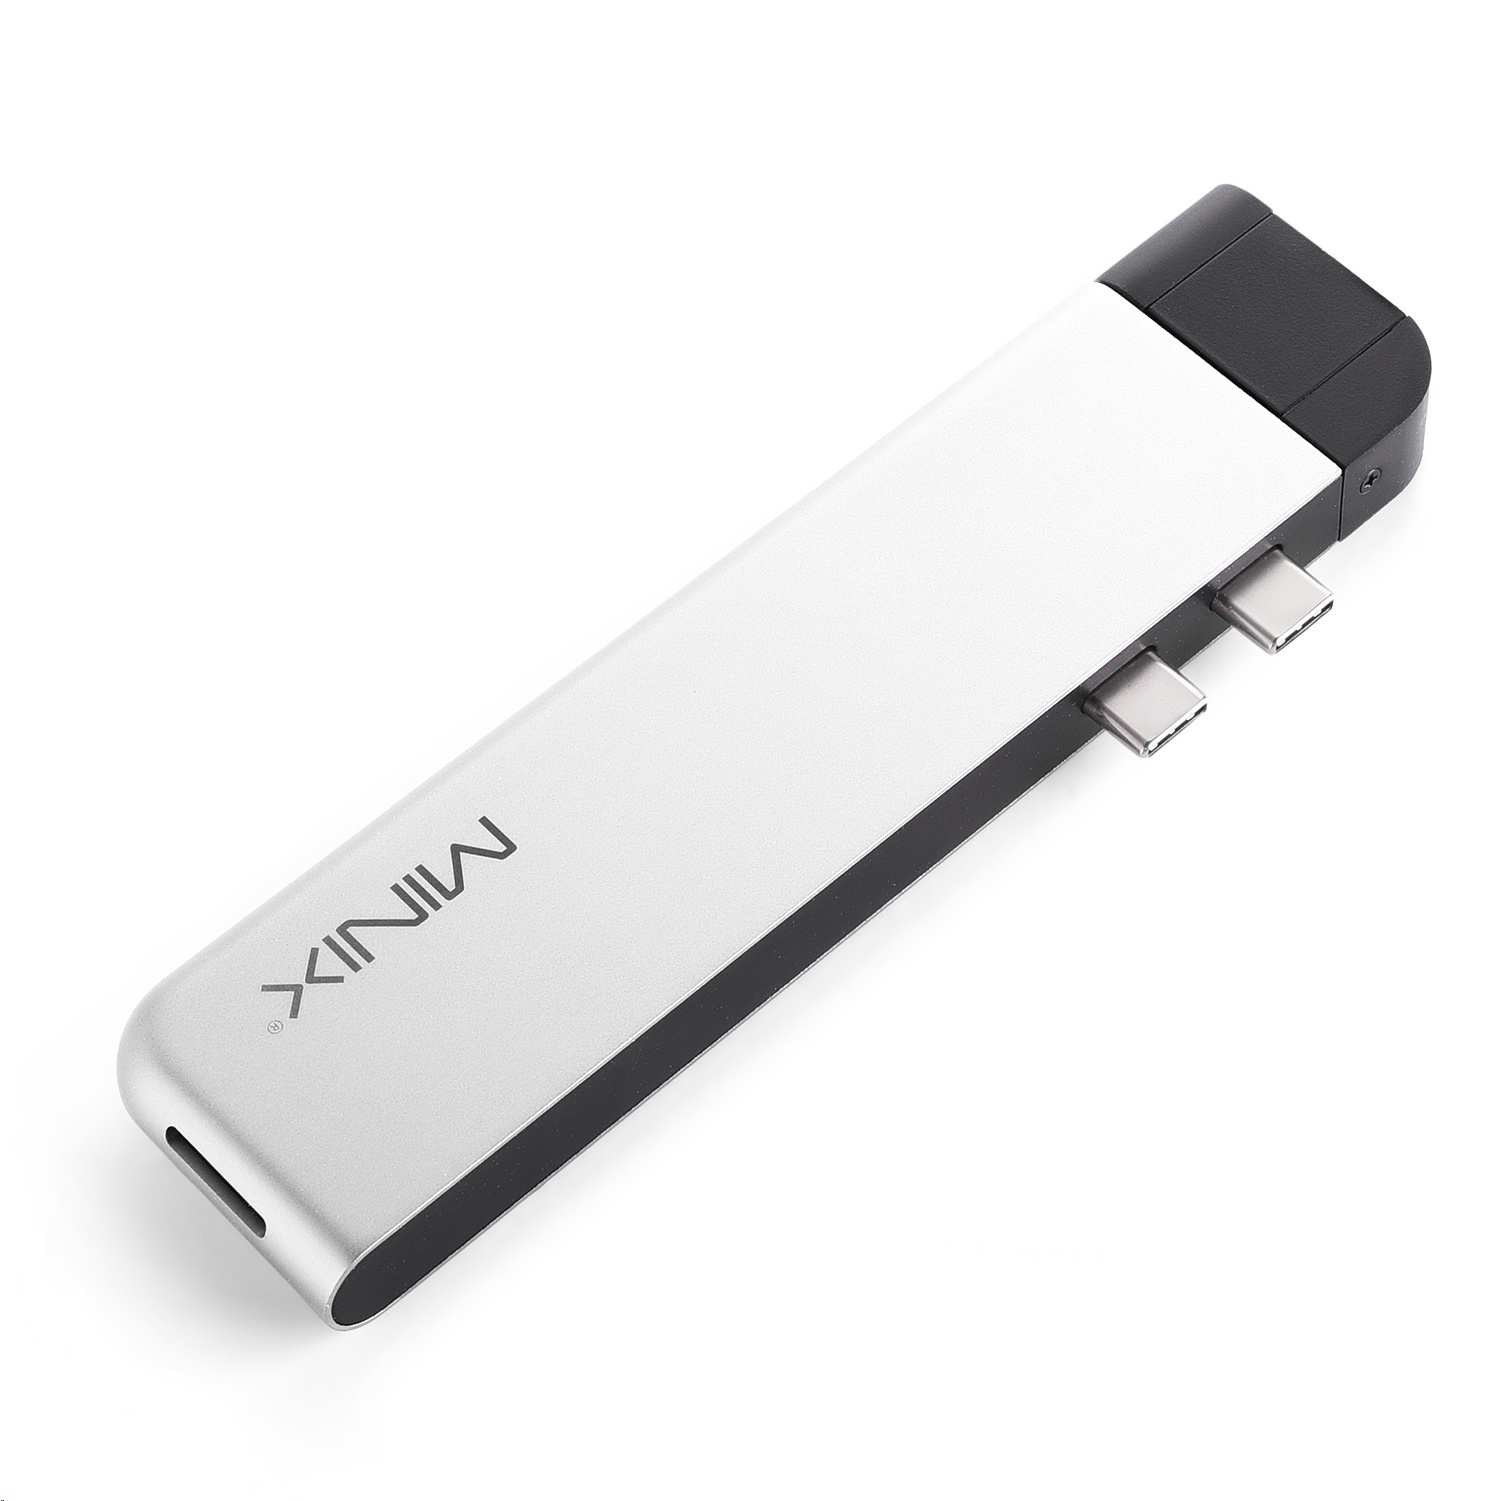 MiniX NEO C-DH Dual HDMI Multimedia Adapter (Silver)